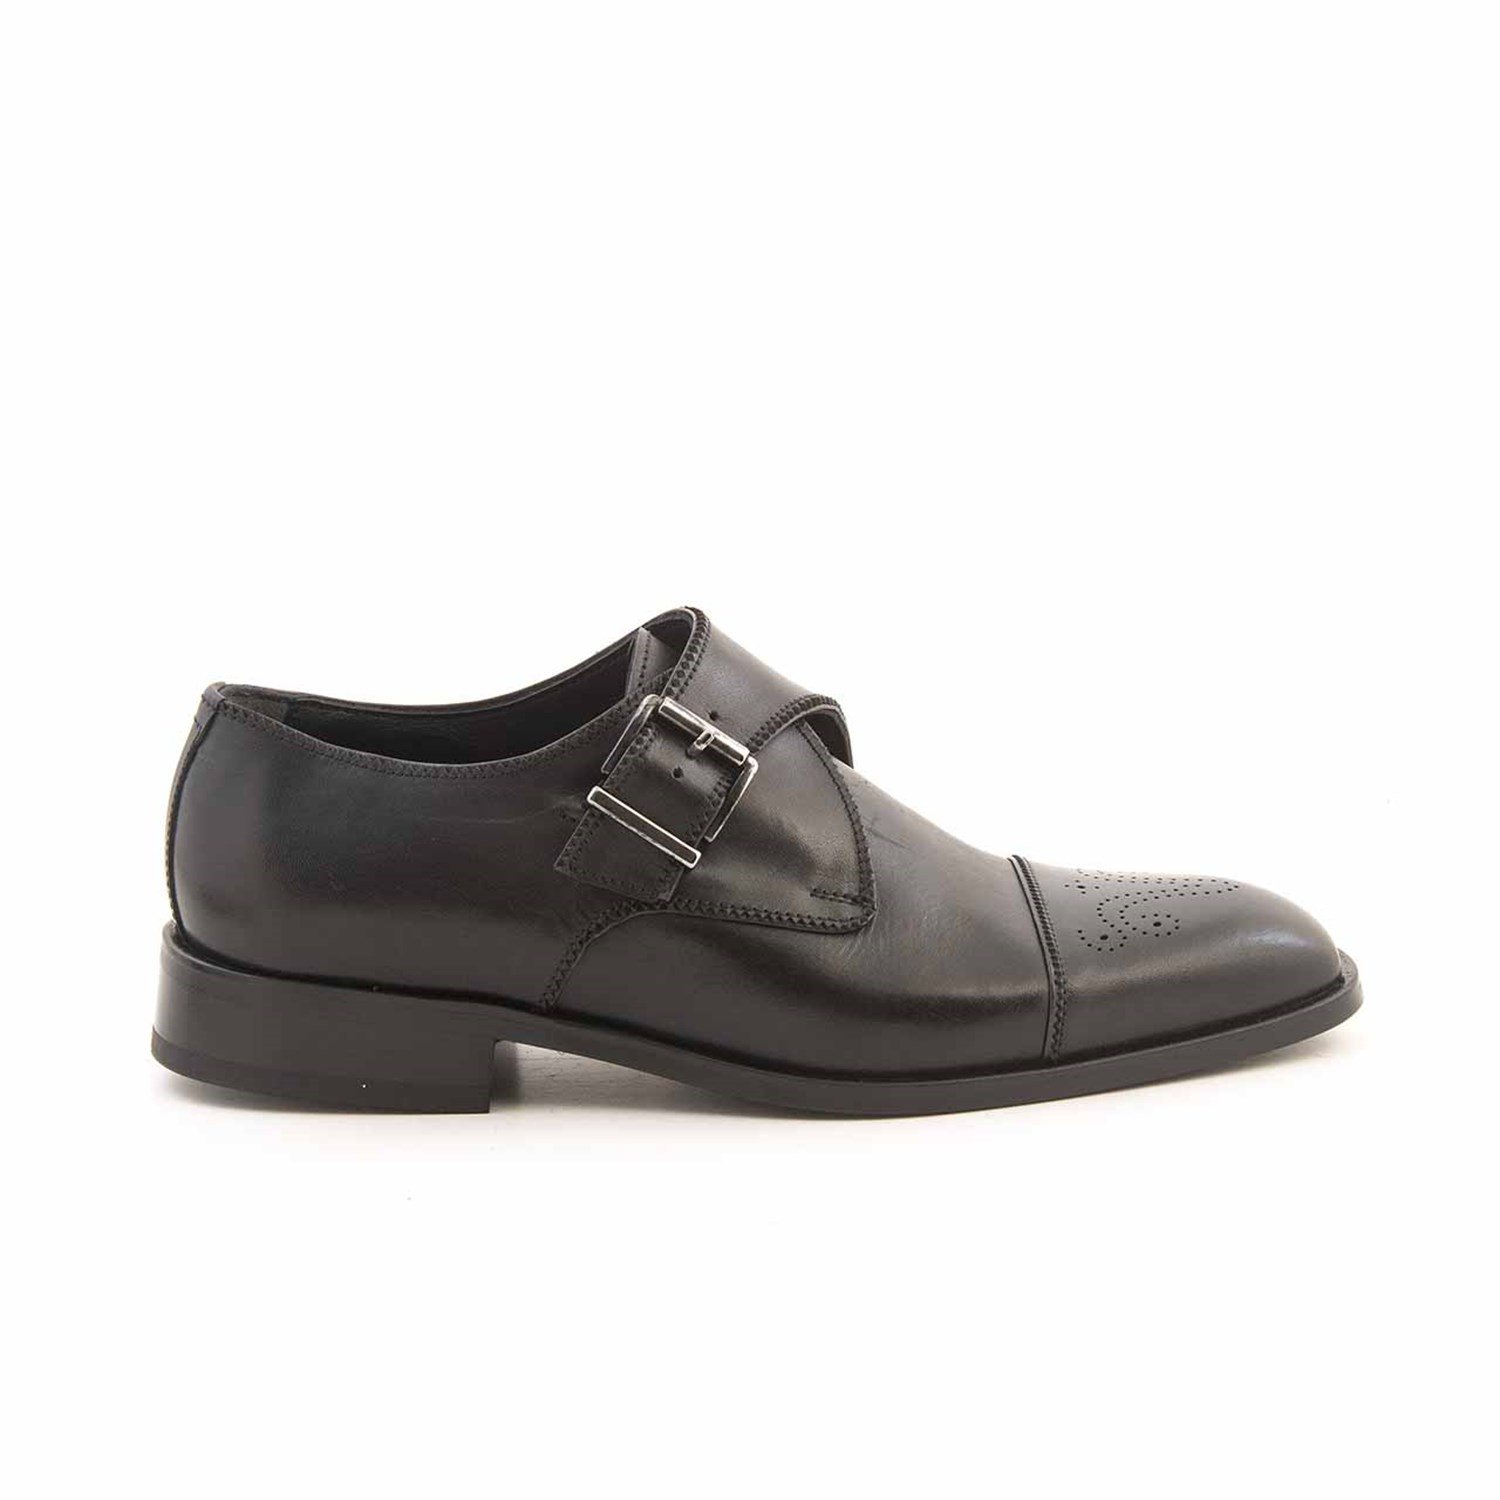 Kemal Tanca Leather Men's Classic Shoes